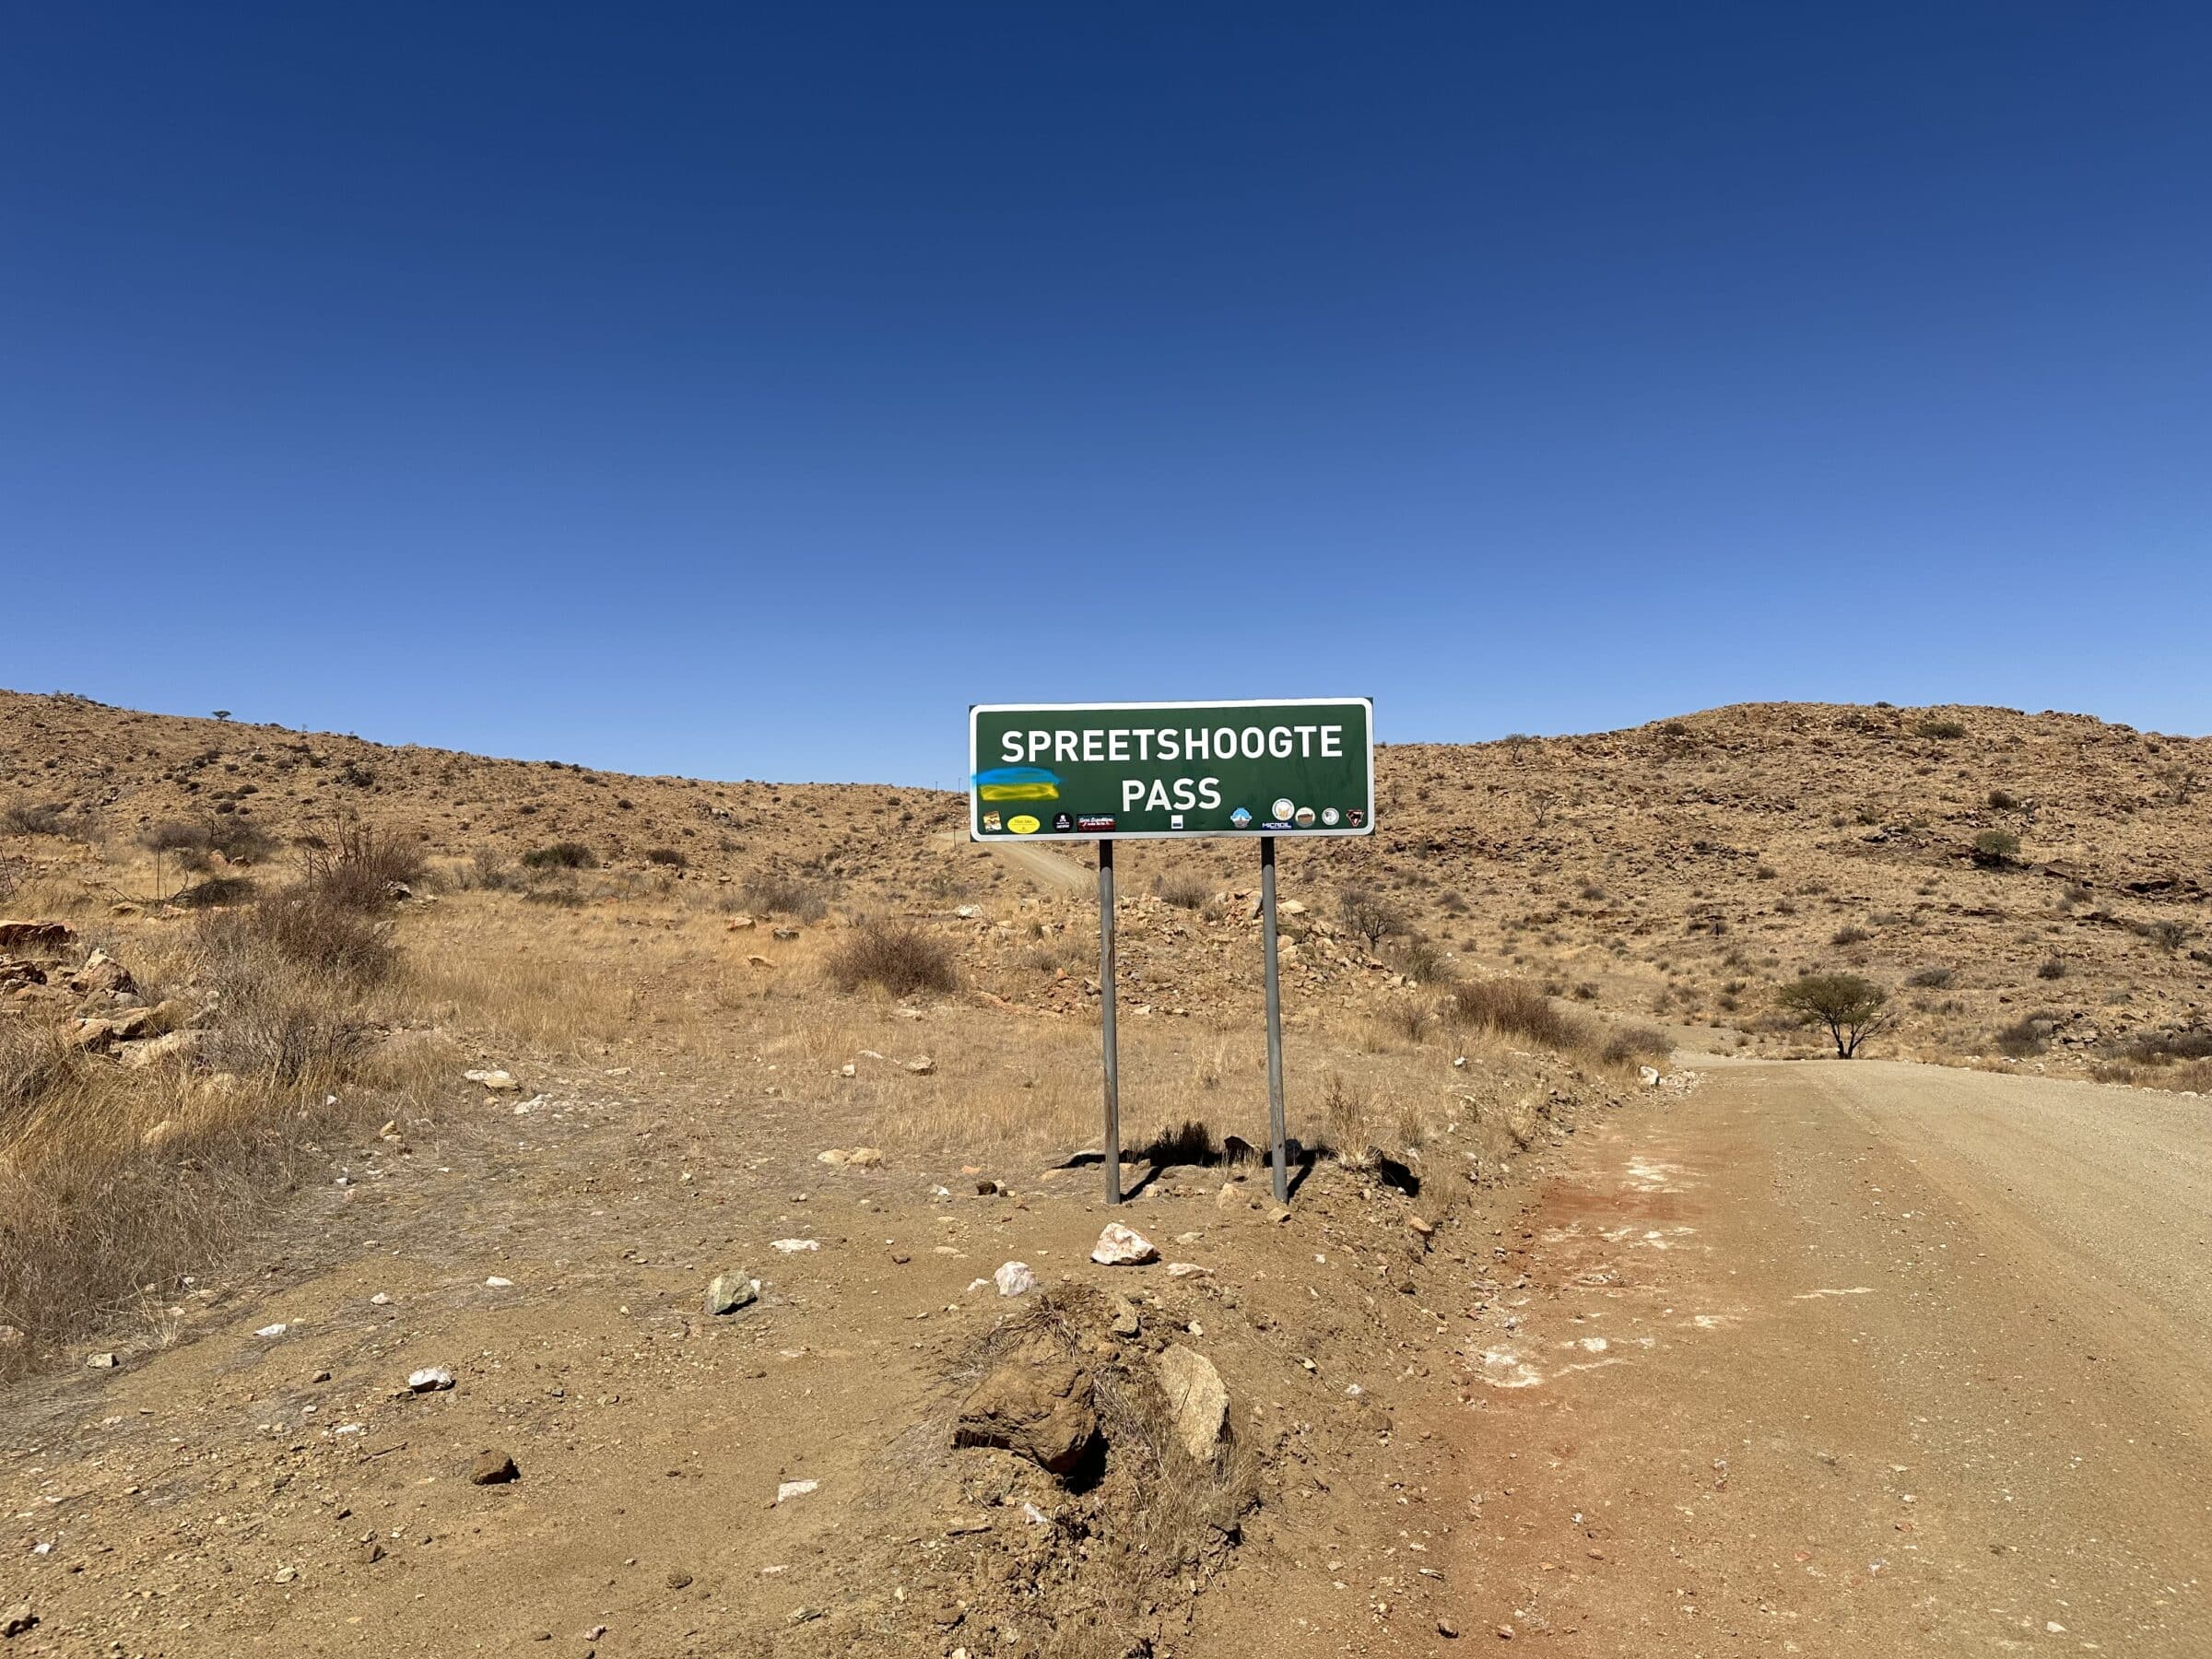 Spridningshöjd steg 1 | Överlandning i Namibia